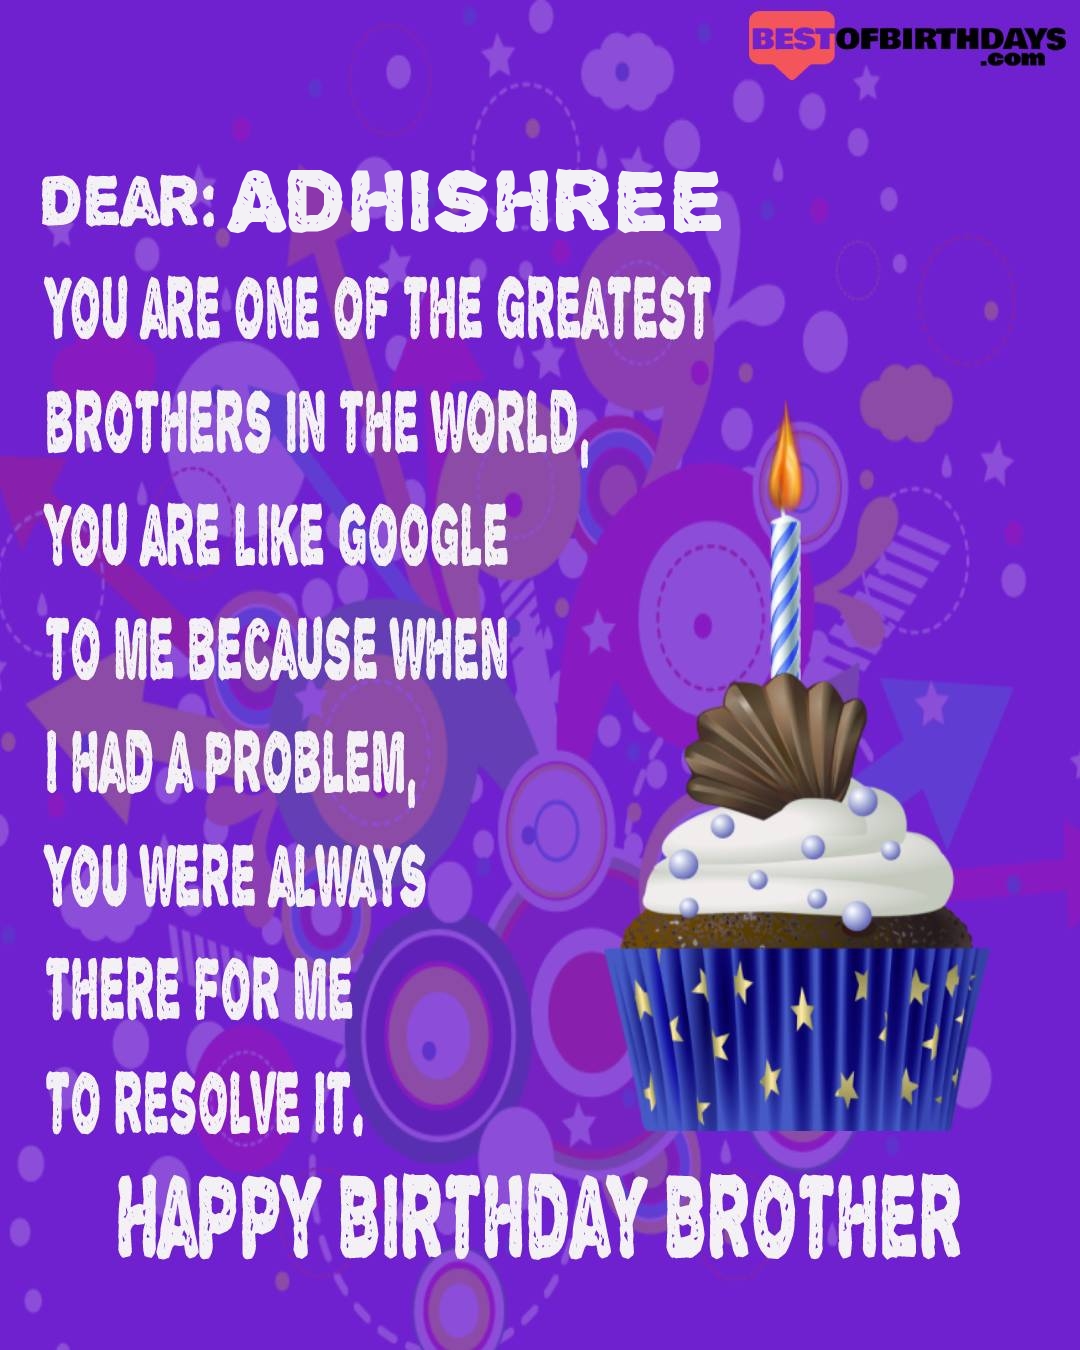 Happy birthday adhishree bhai brother bro